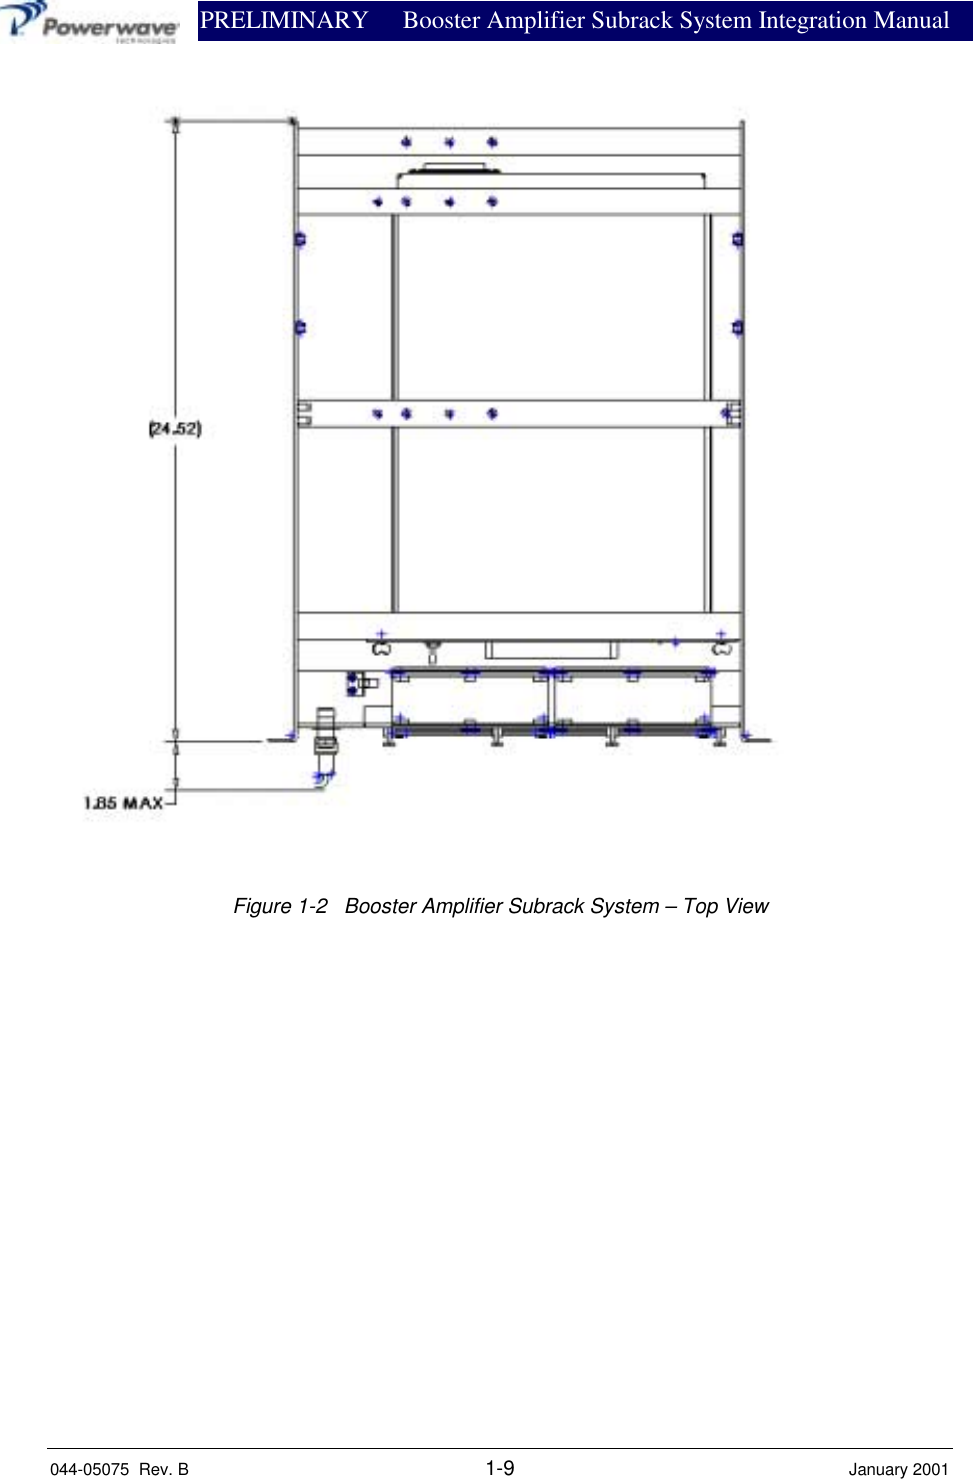                PRELIMINARY Booster Amplifier Subrack System Integration Manual044-05075  Rev. B 1-9 January 2001Figure 1-2   Booster Amplifier Subrack System – Top View